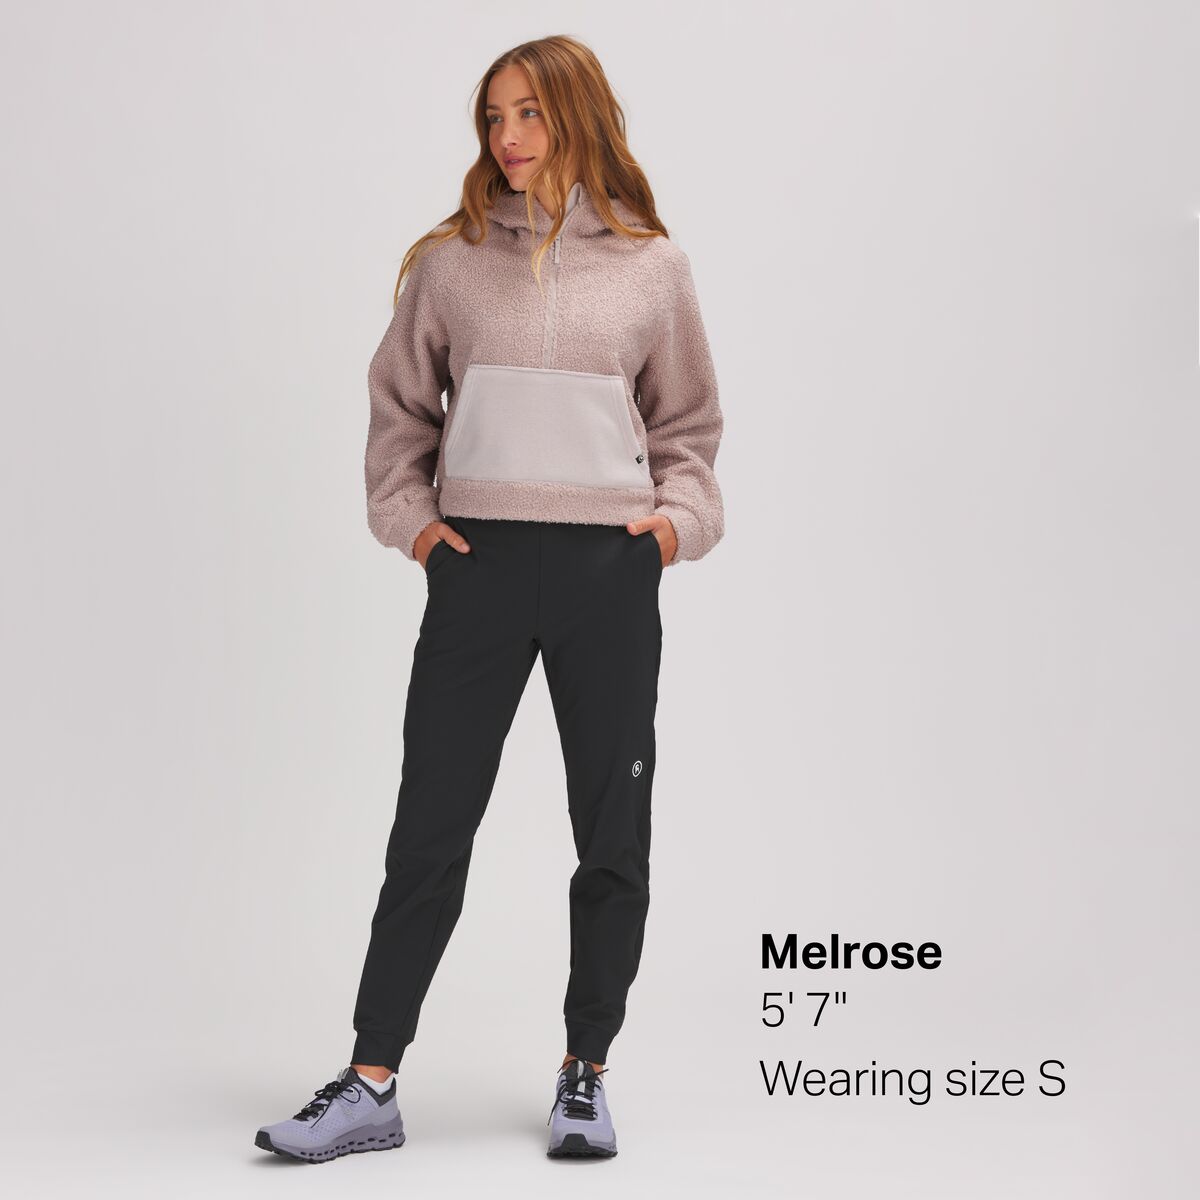  MELOO Fleece Lined Pants Women - Water Resistant